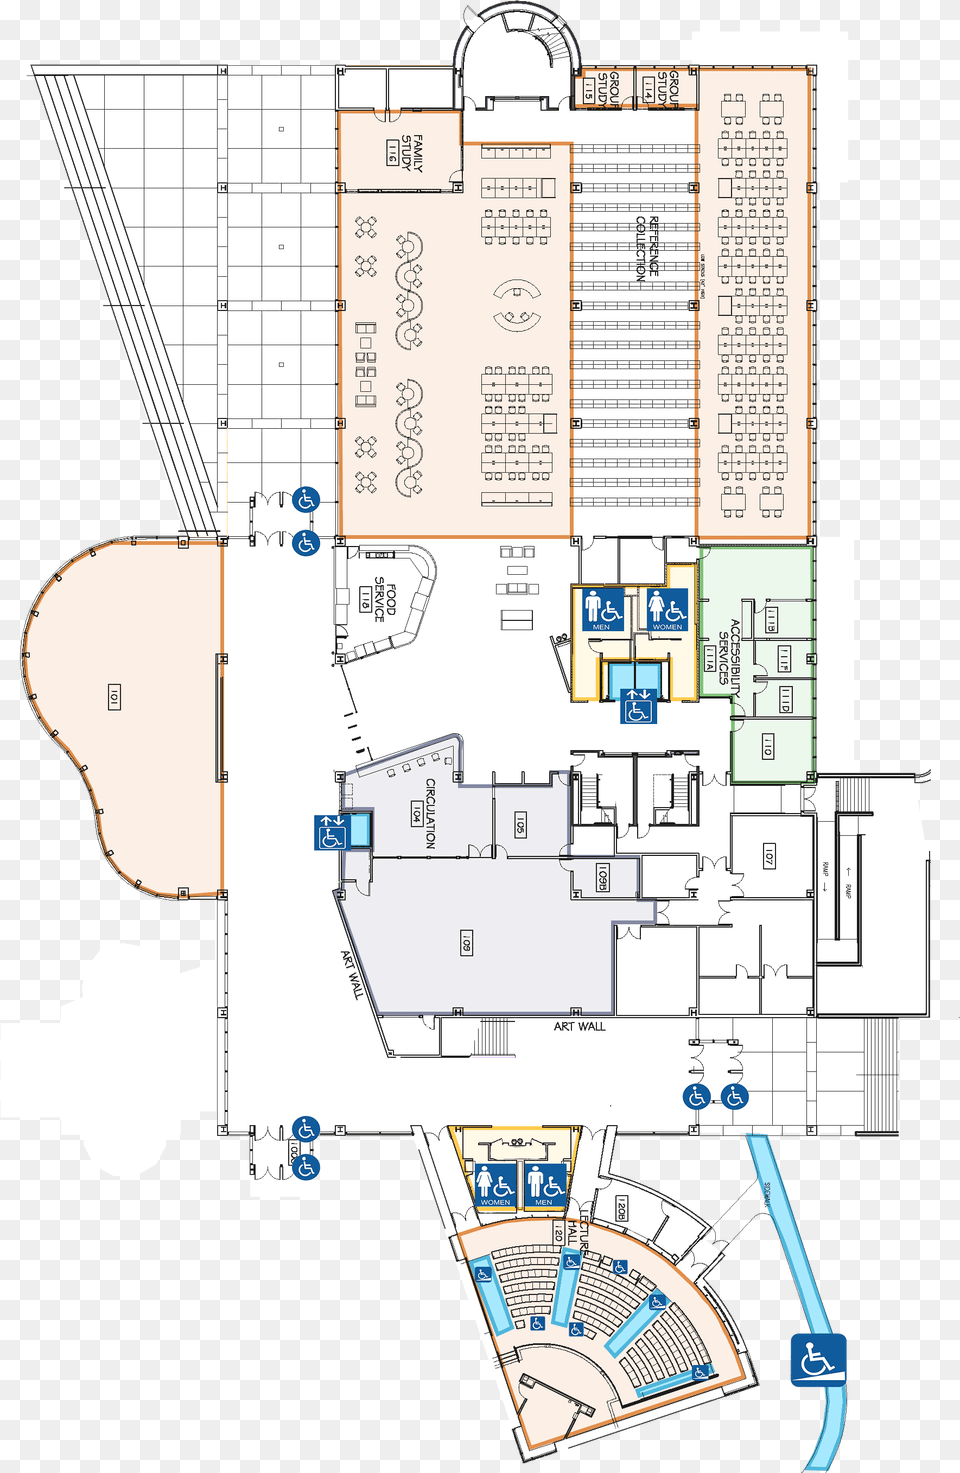 Fulton Library Level Floor Plan, Diagram, Cad Diagram, Floor Plan Png Image